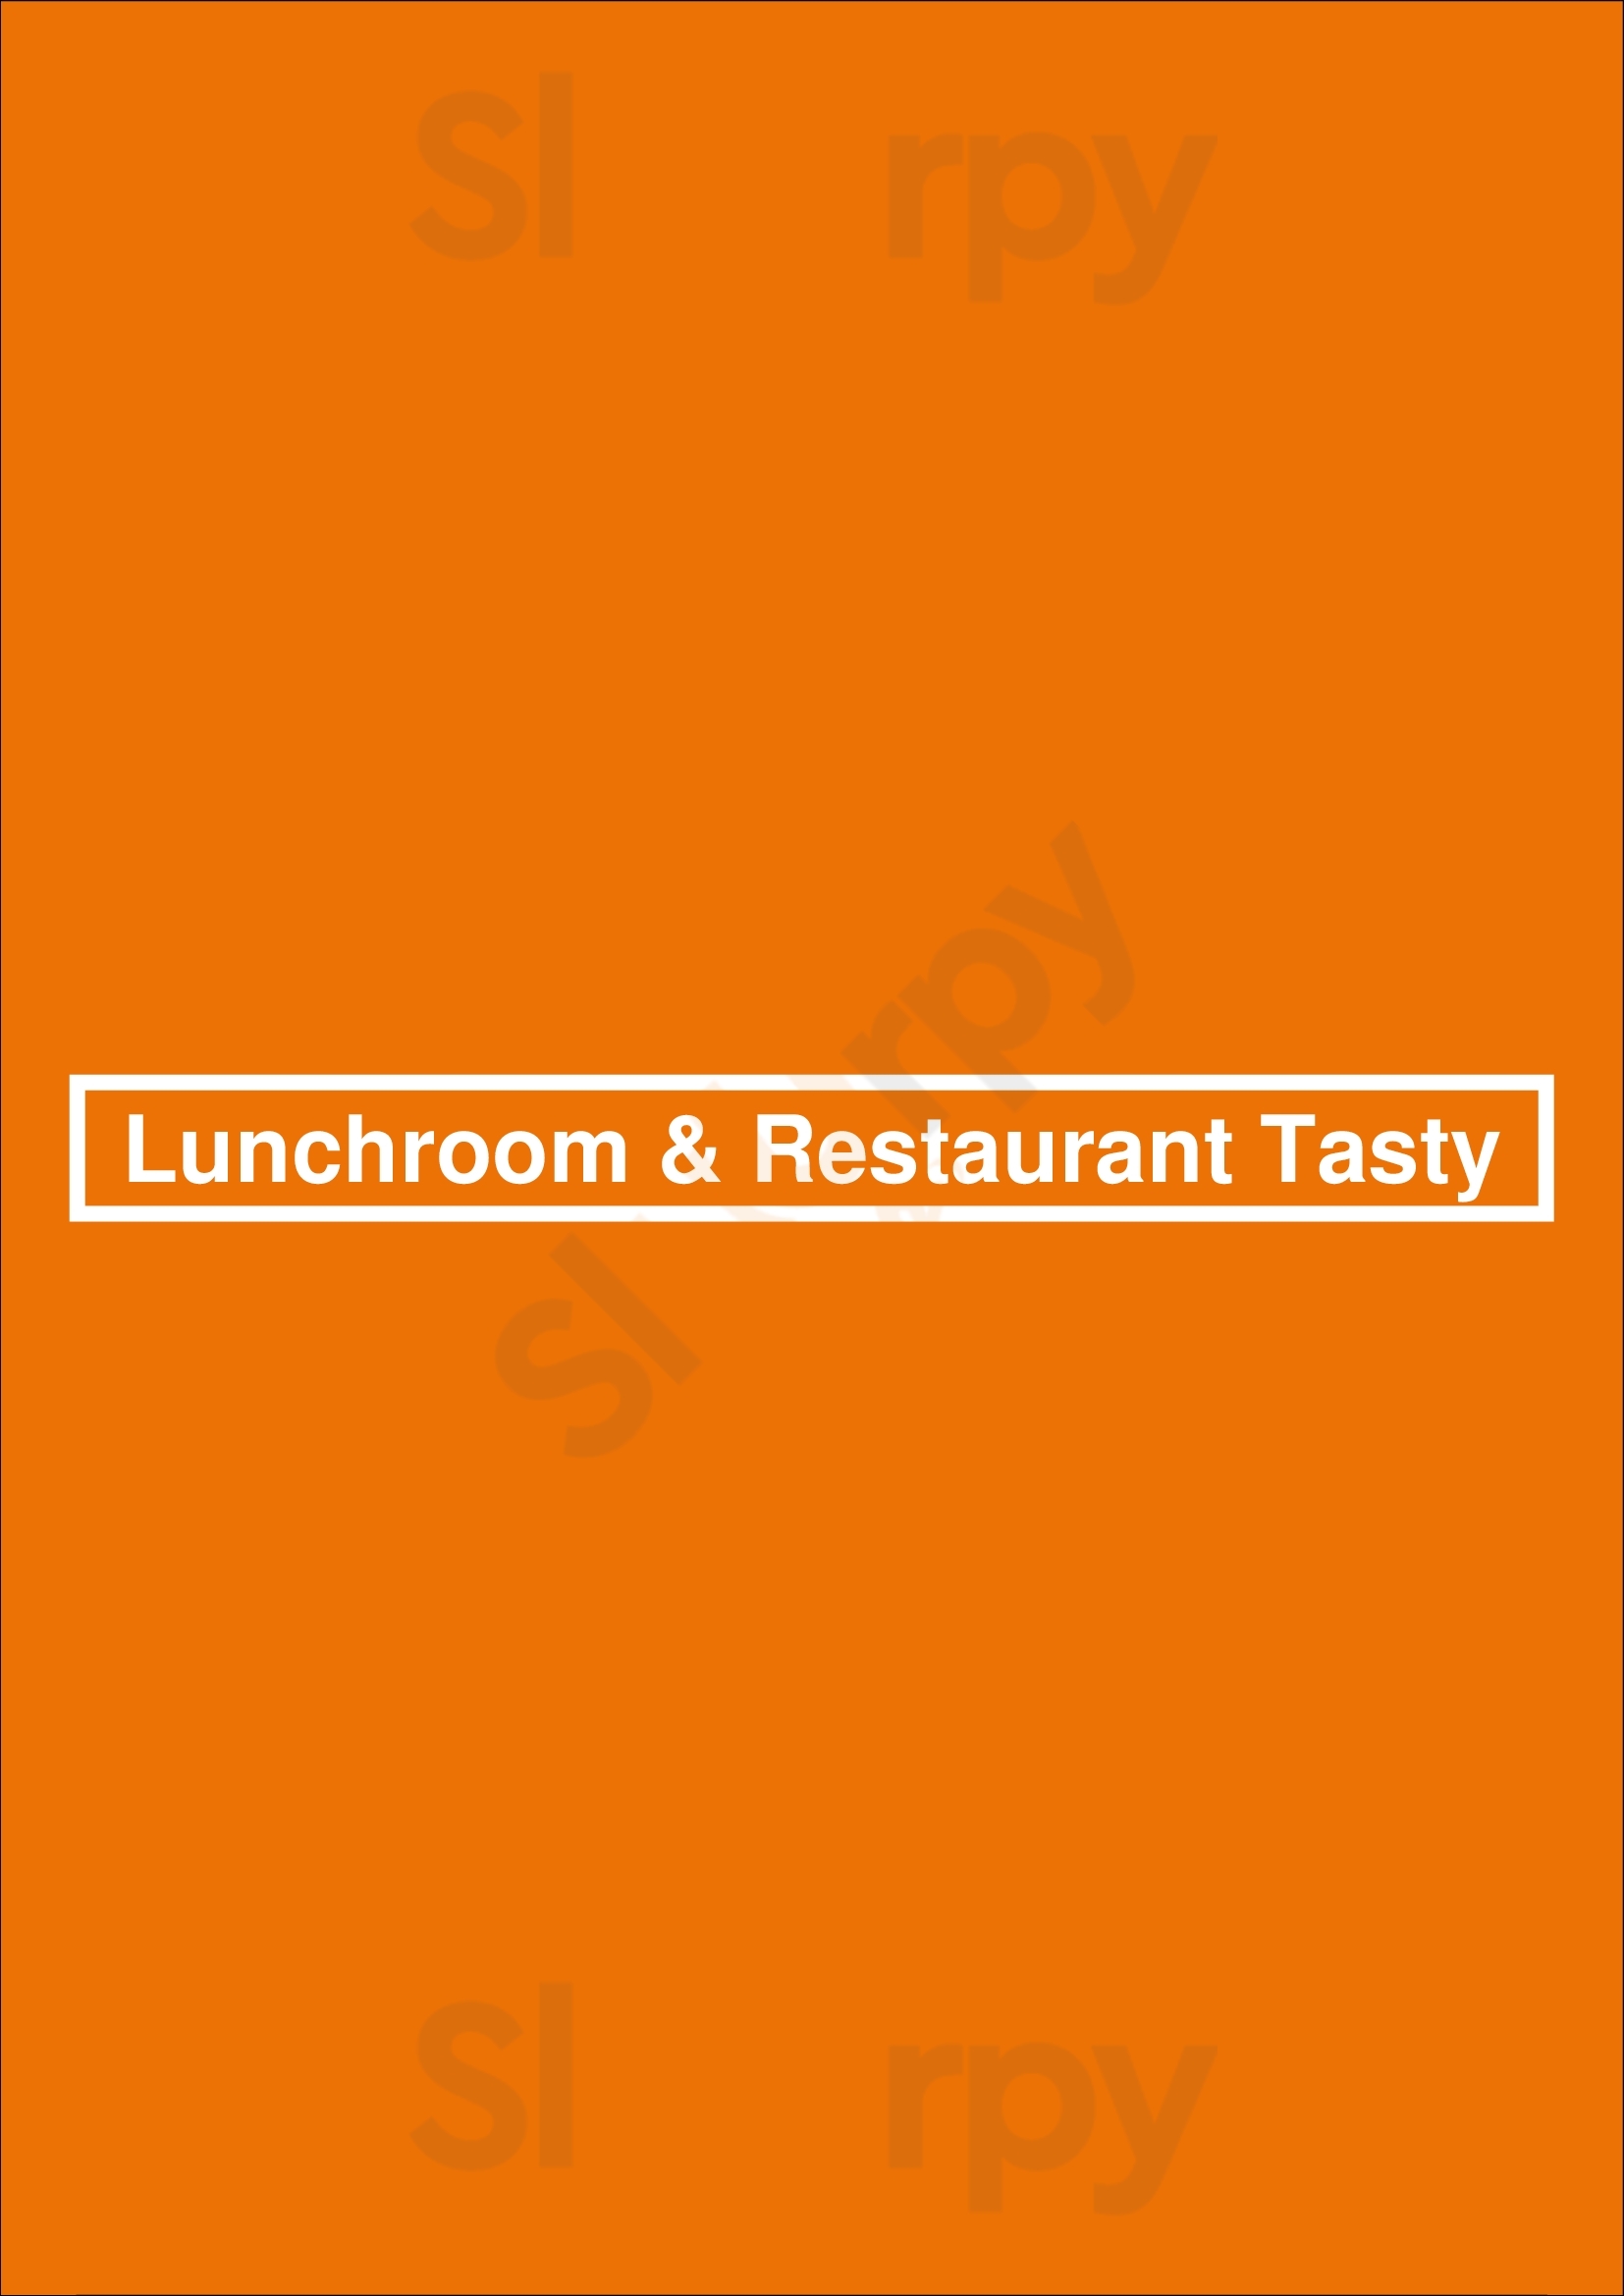 Lunchroom & Restaurant Tasty Den Haag Menu - 1